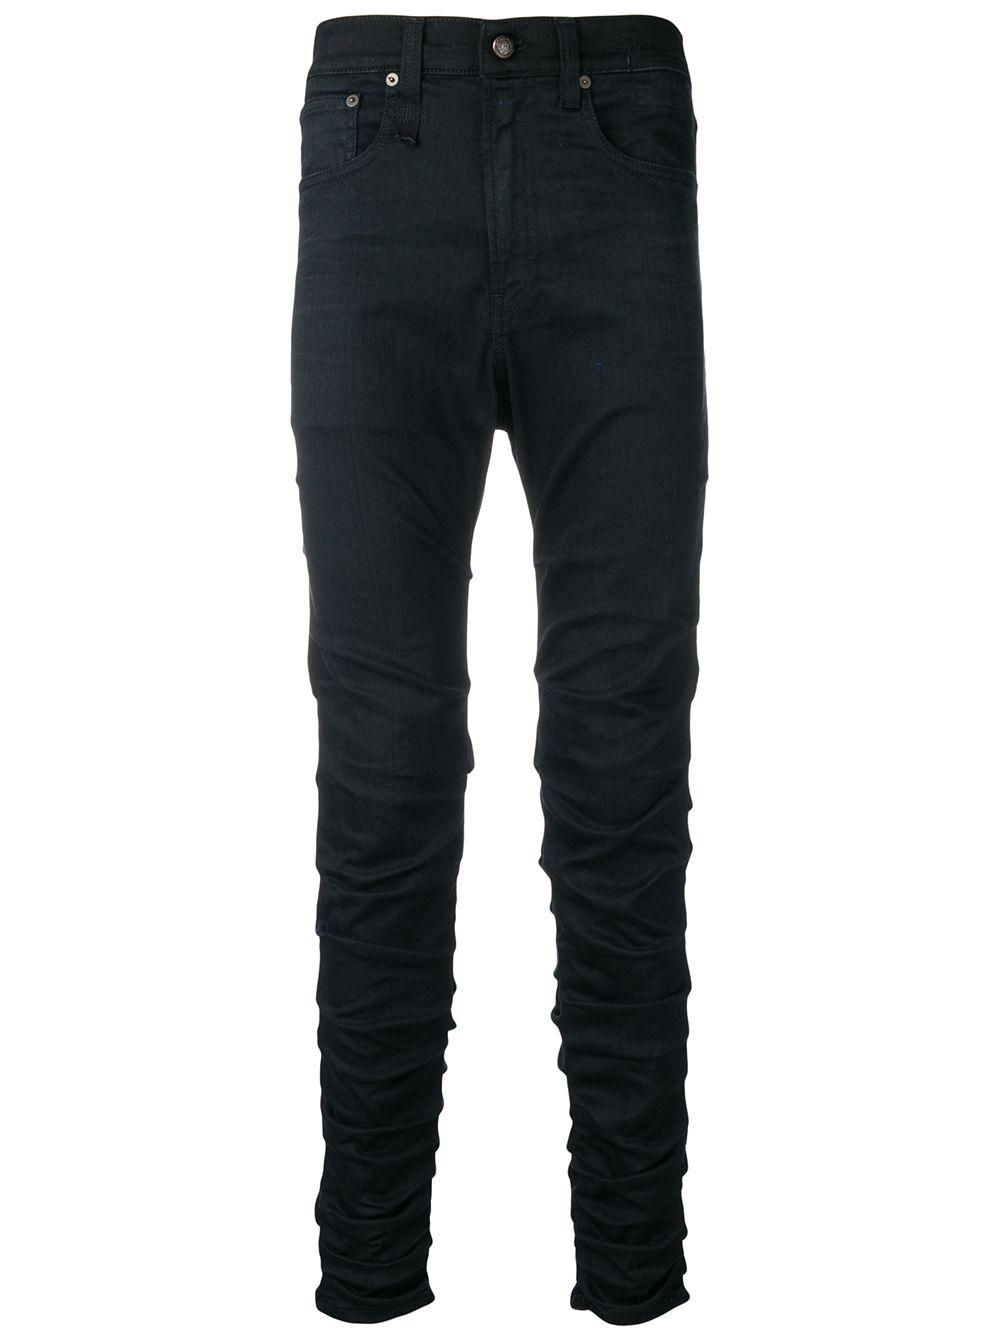 R13 Cotton Wrinkled Effect Jeans in Black for Men - Lyst